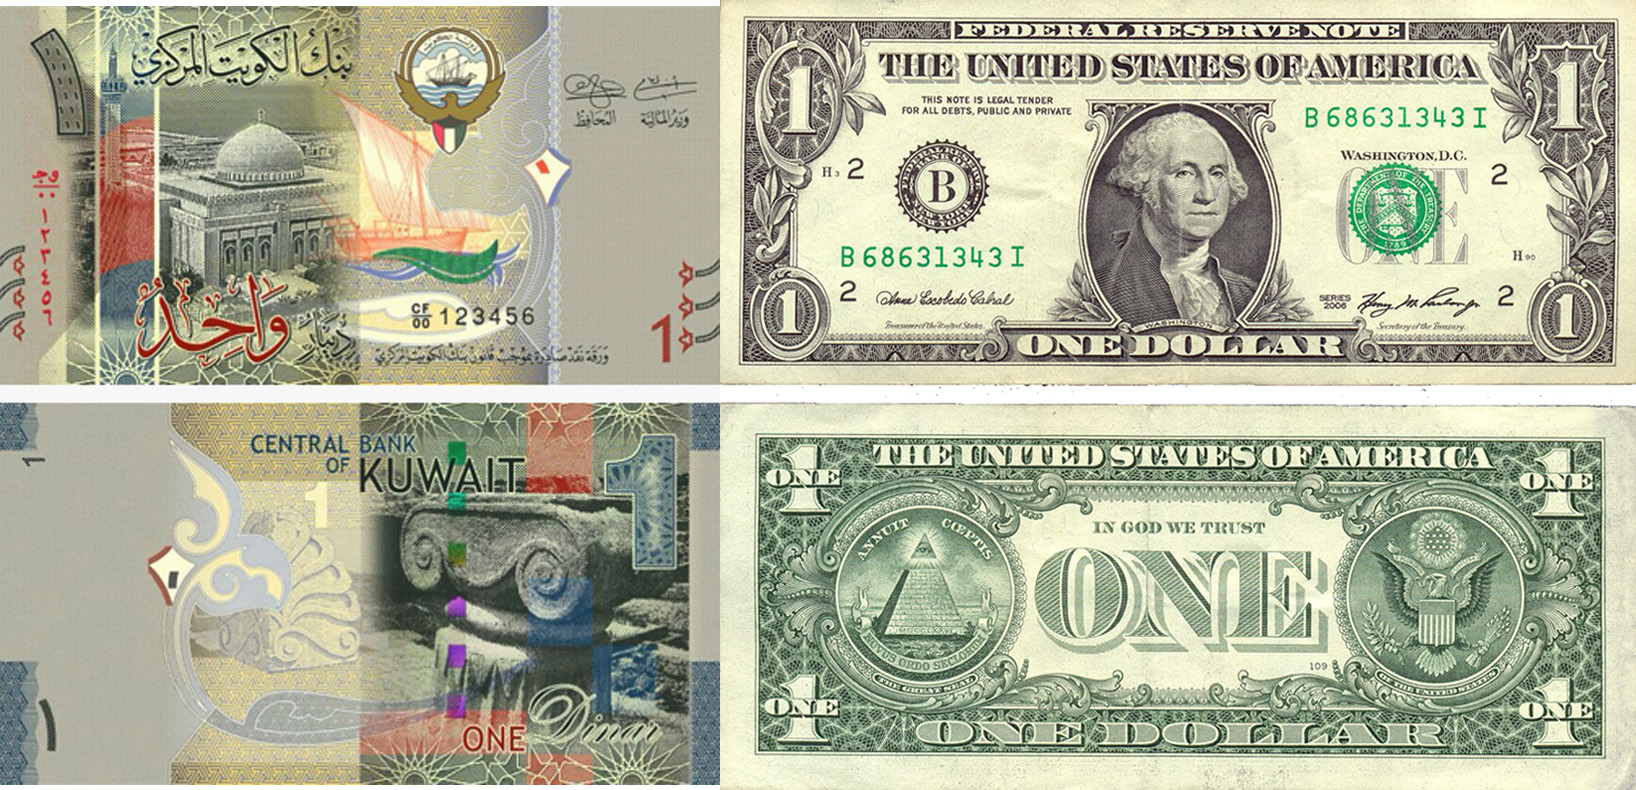 US dollars against the Kuwaiti dinar